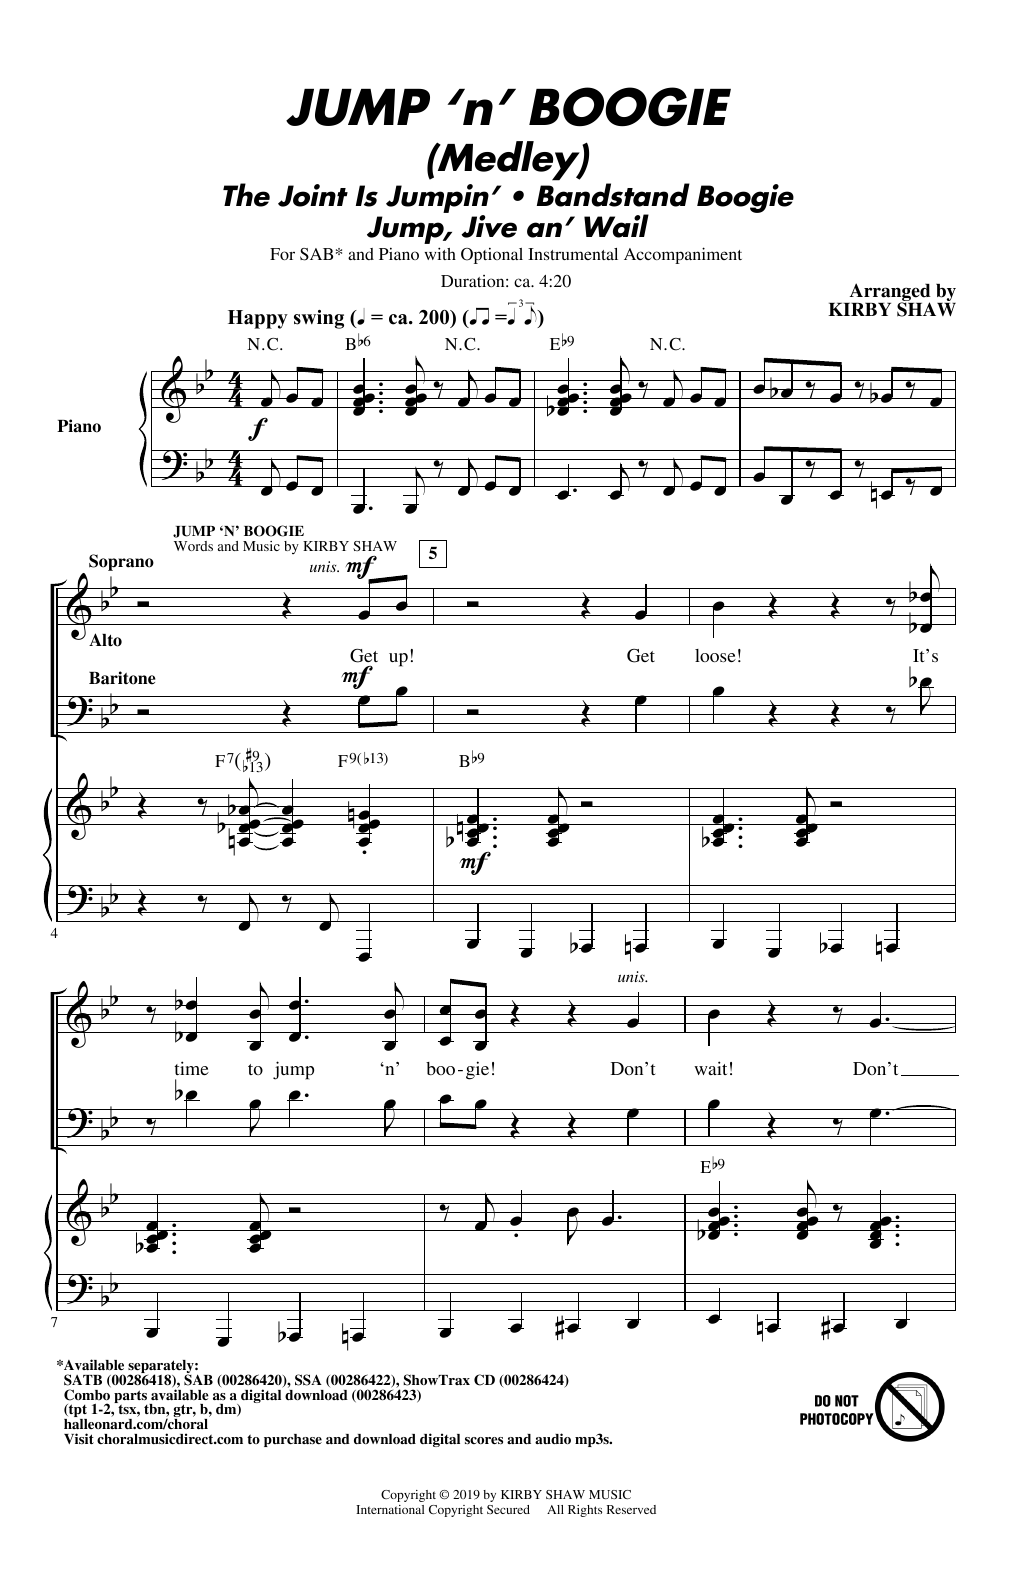 Kirby Shaw Jump 'n' Boogie (Medley) Sheet Music Notes & Chords for SATB Choir - Download or Print PDF